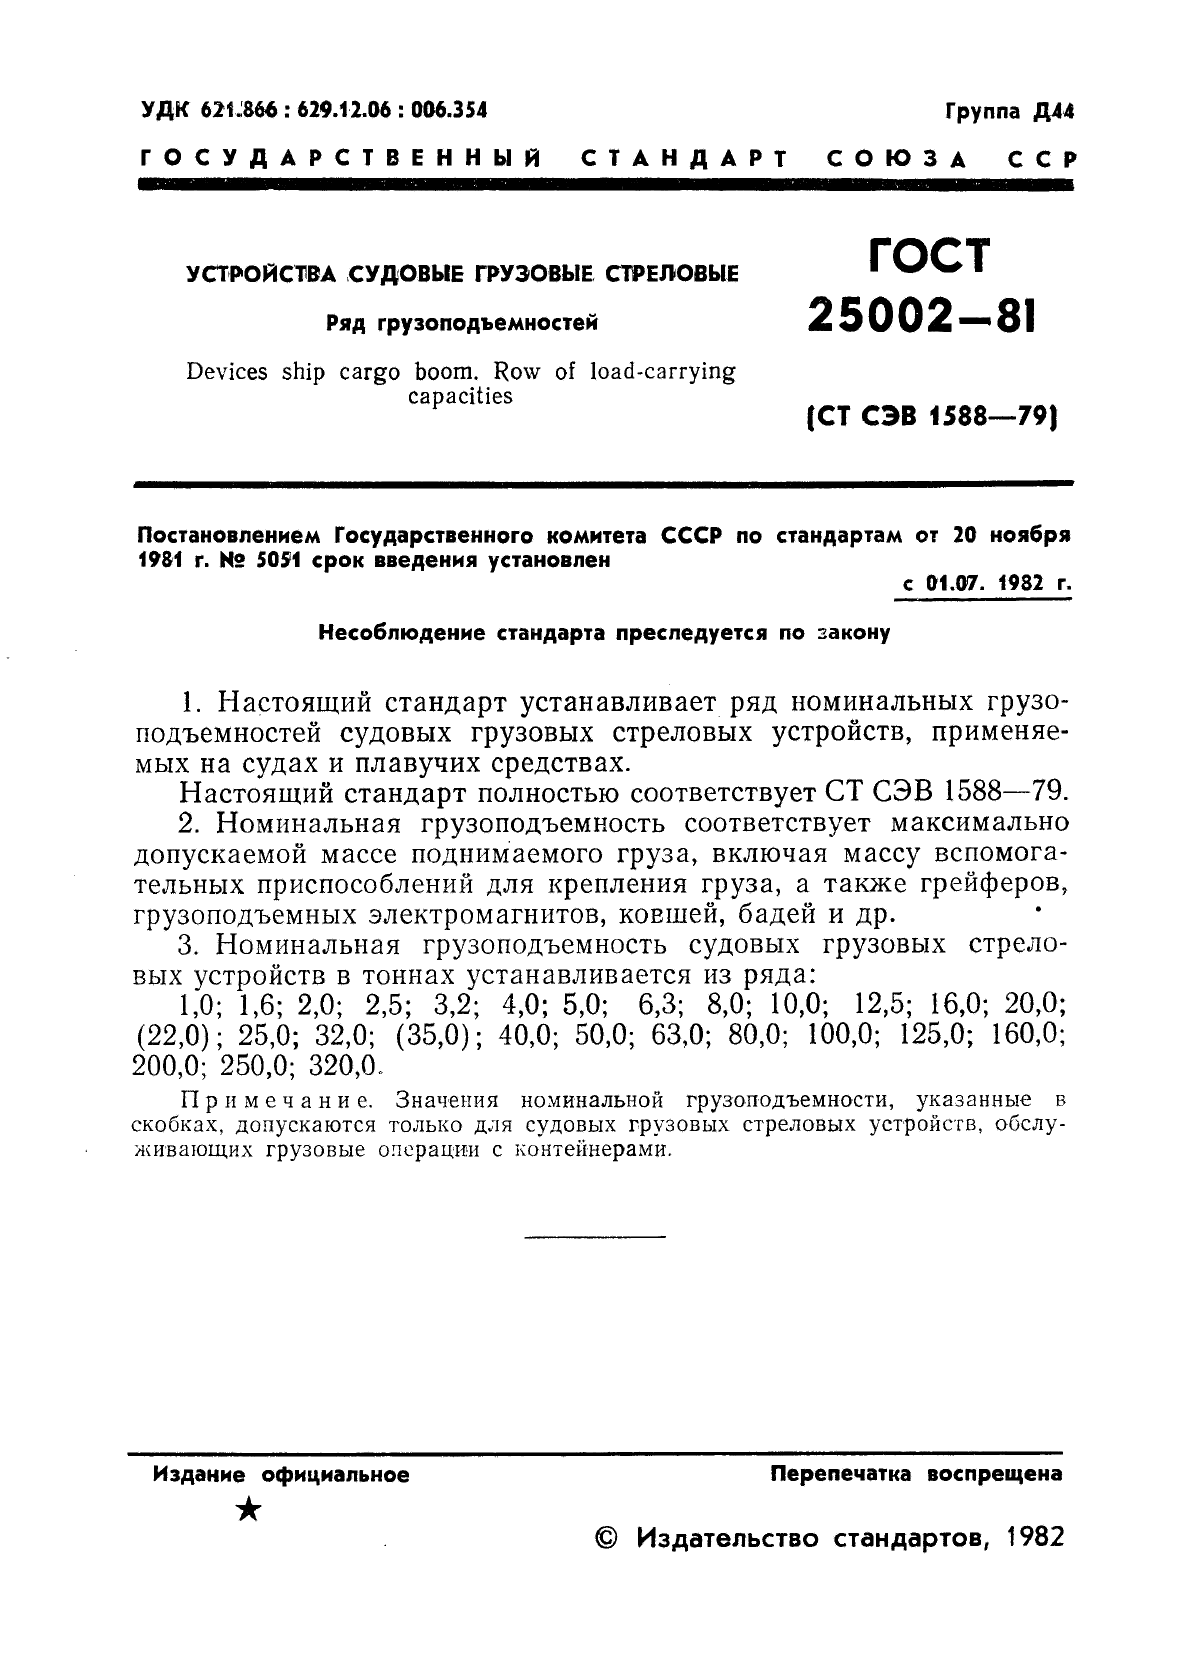 ГОСТ 25002-81